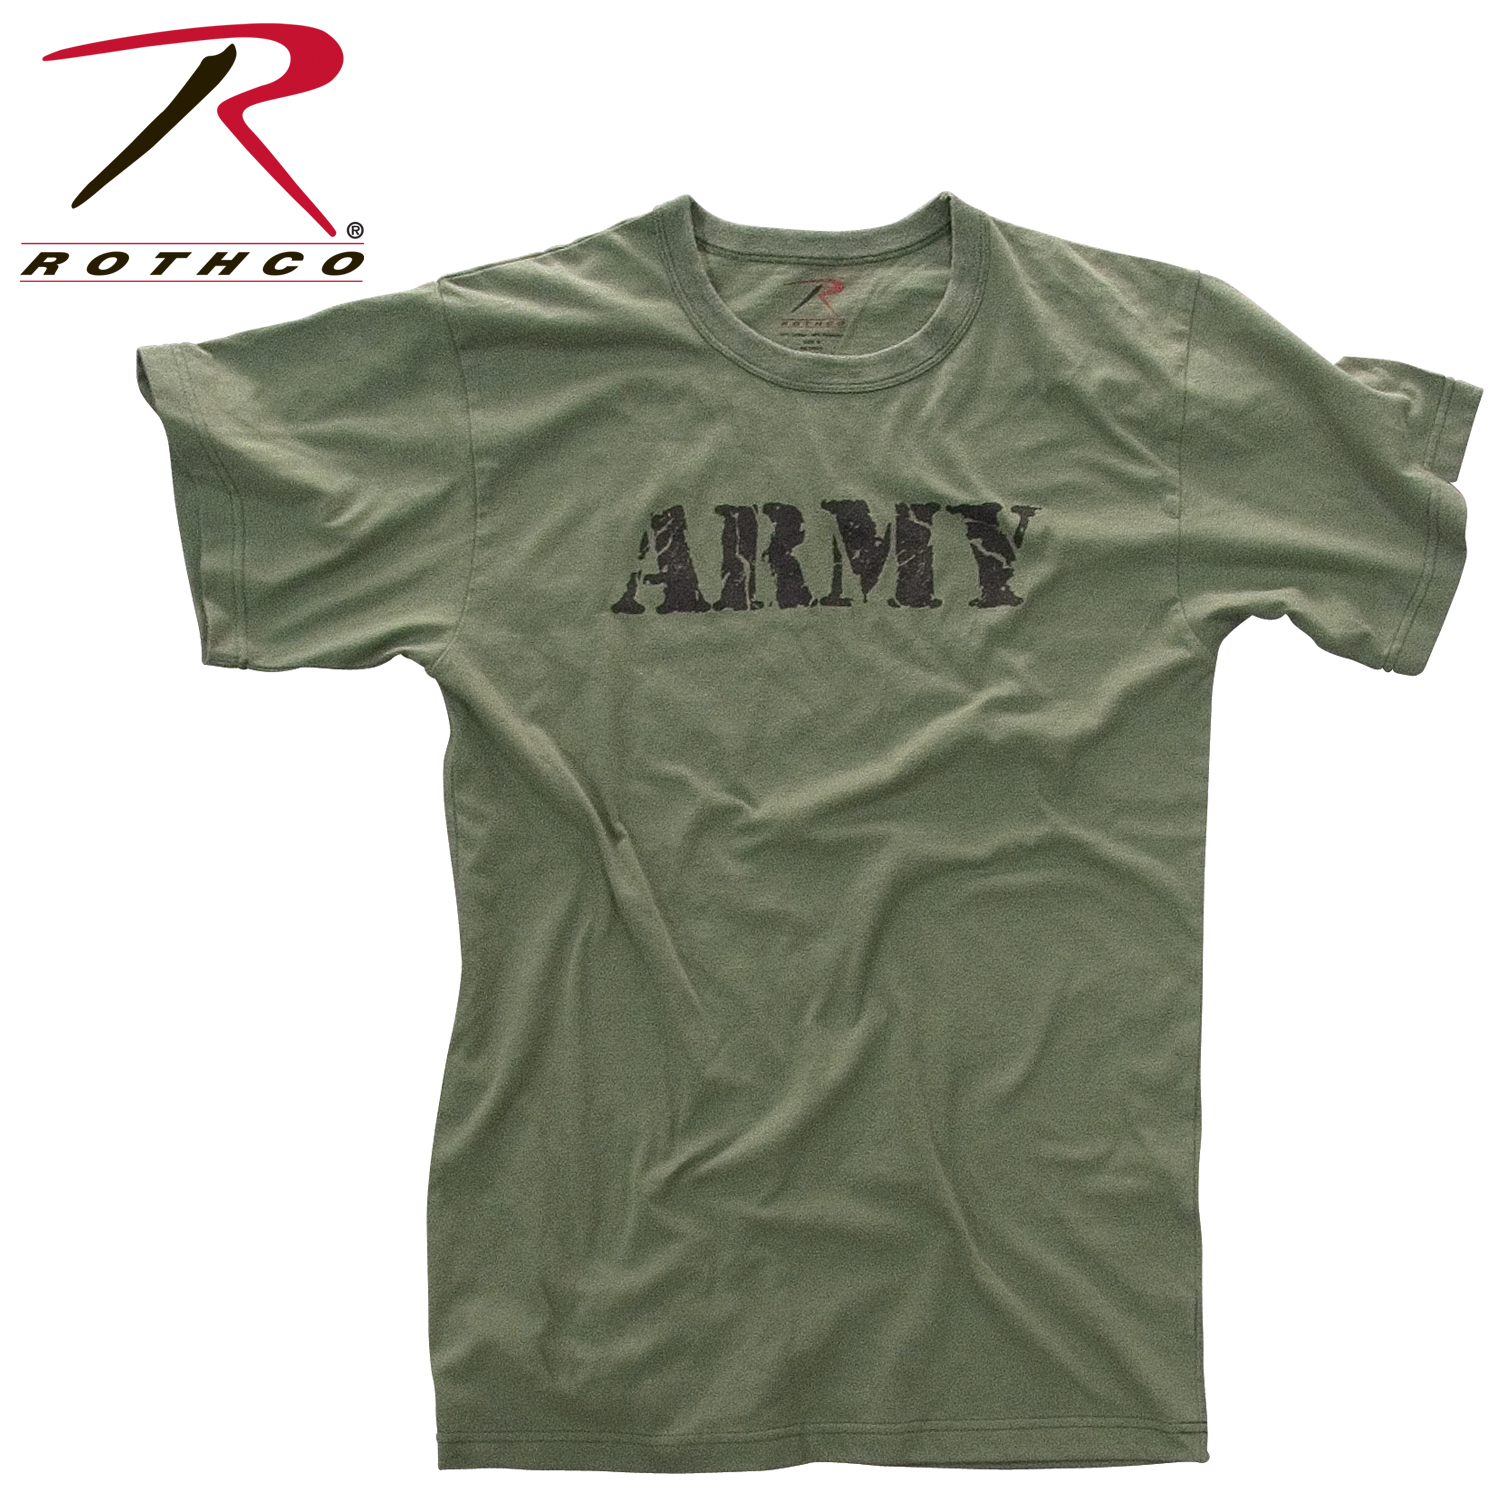 Vintage Army Shirt 40